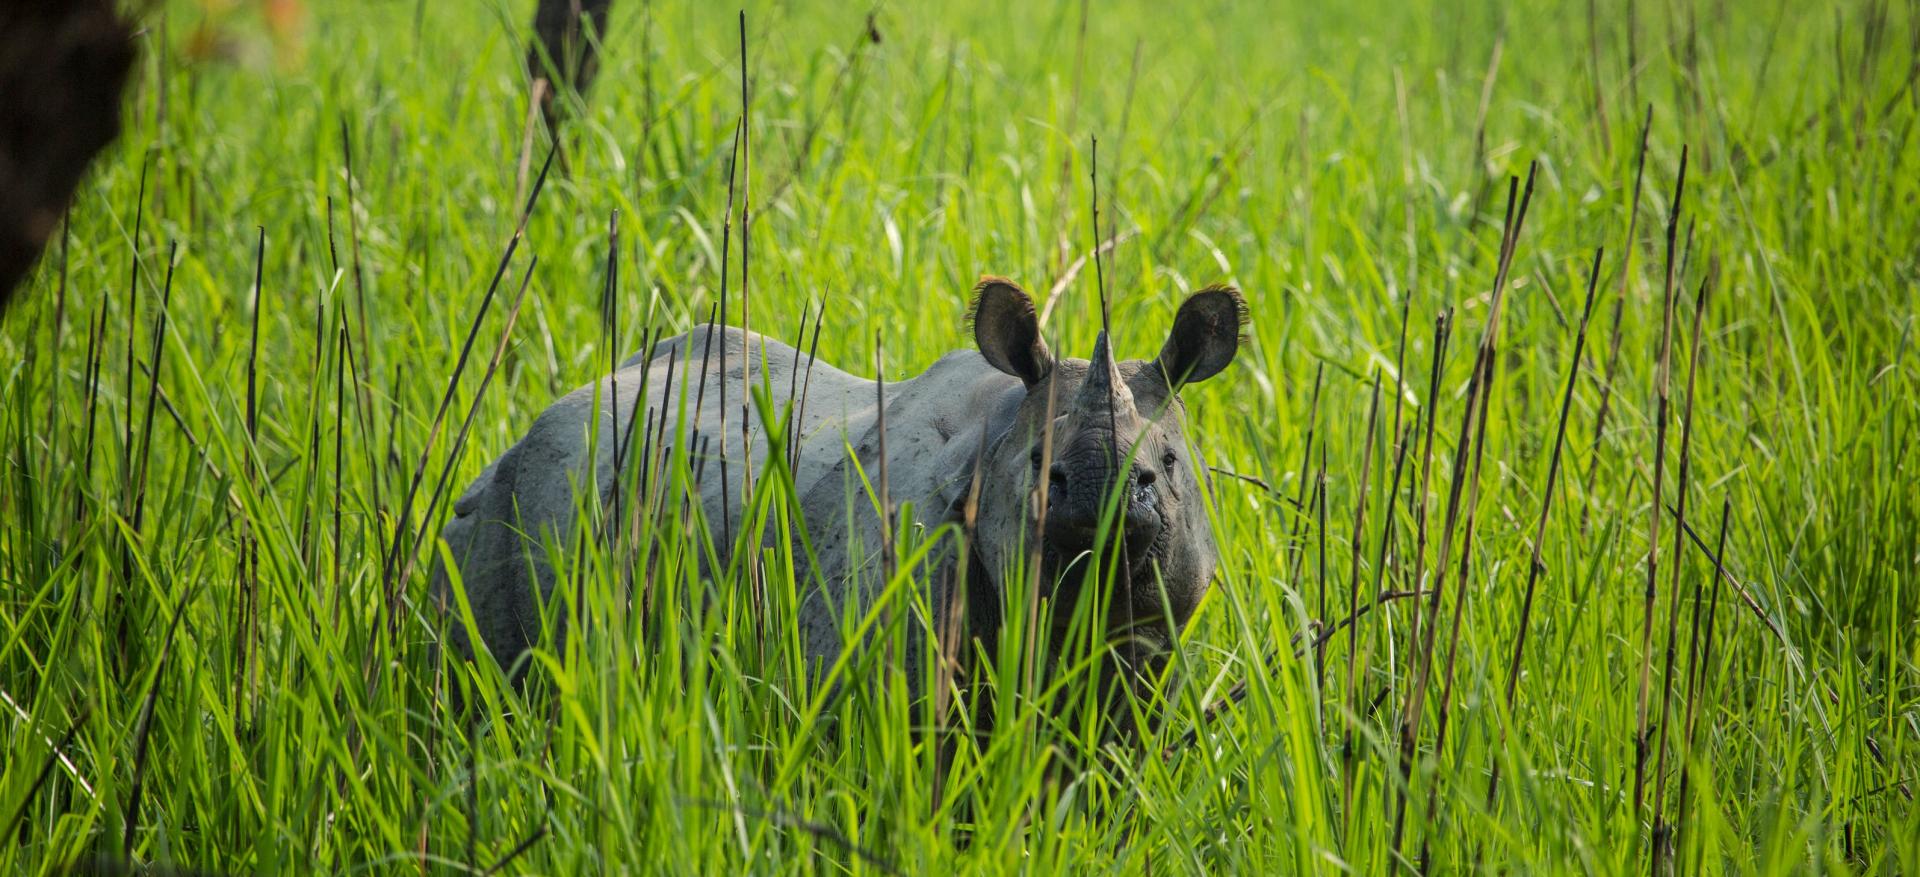 One-horned rhino in Chitwan National Park, Nepal